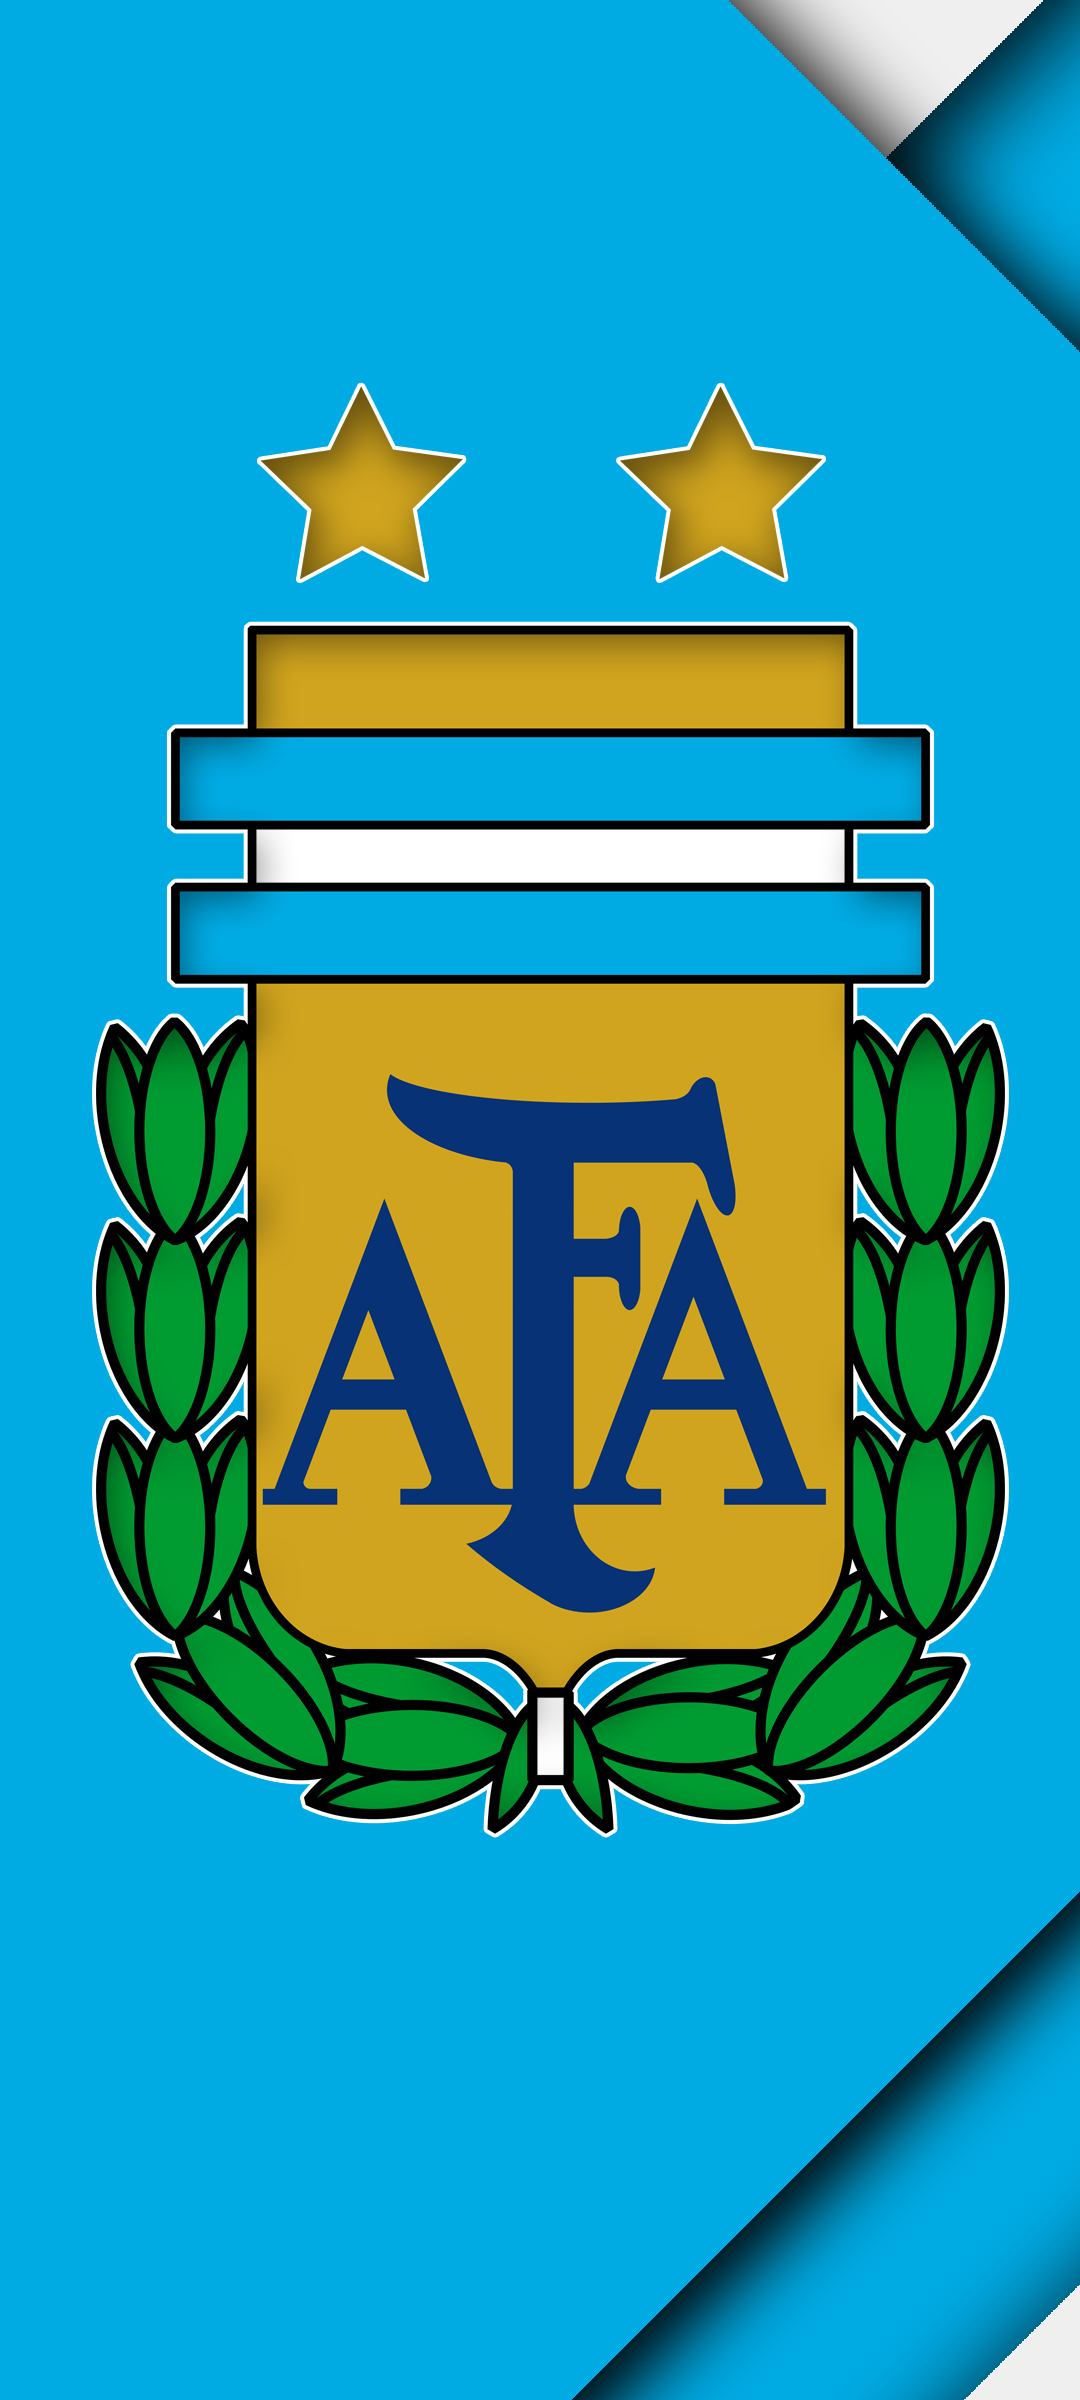 File:Argentina basketball cabb logo.png - Wikipedia